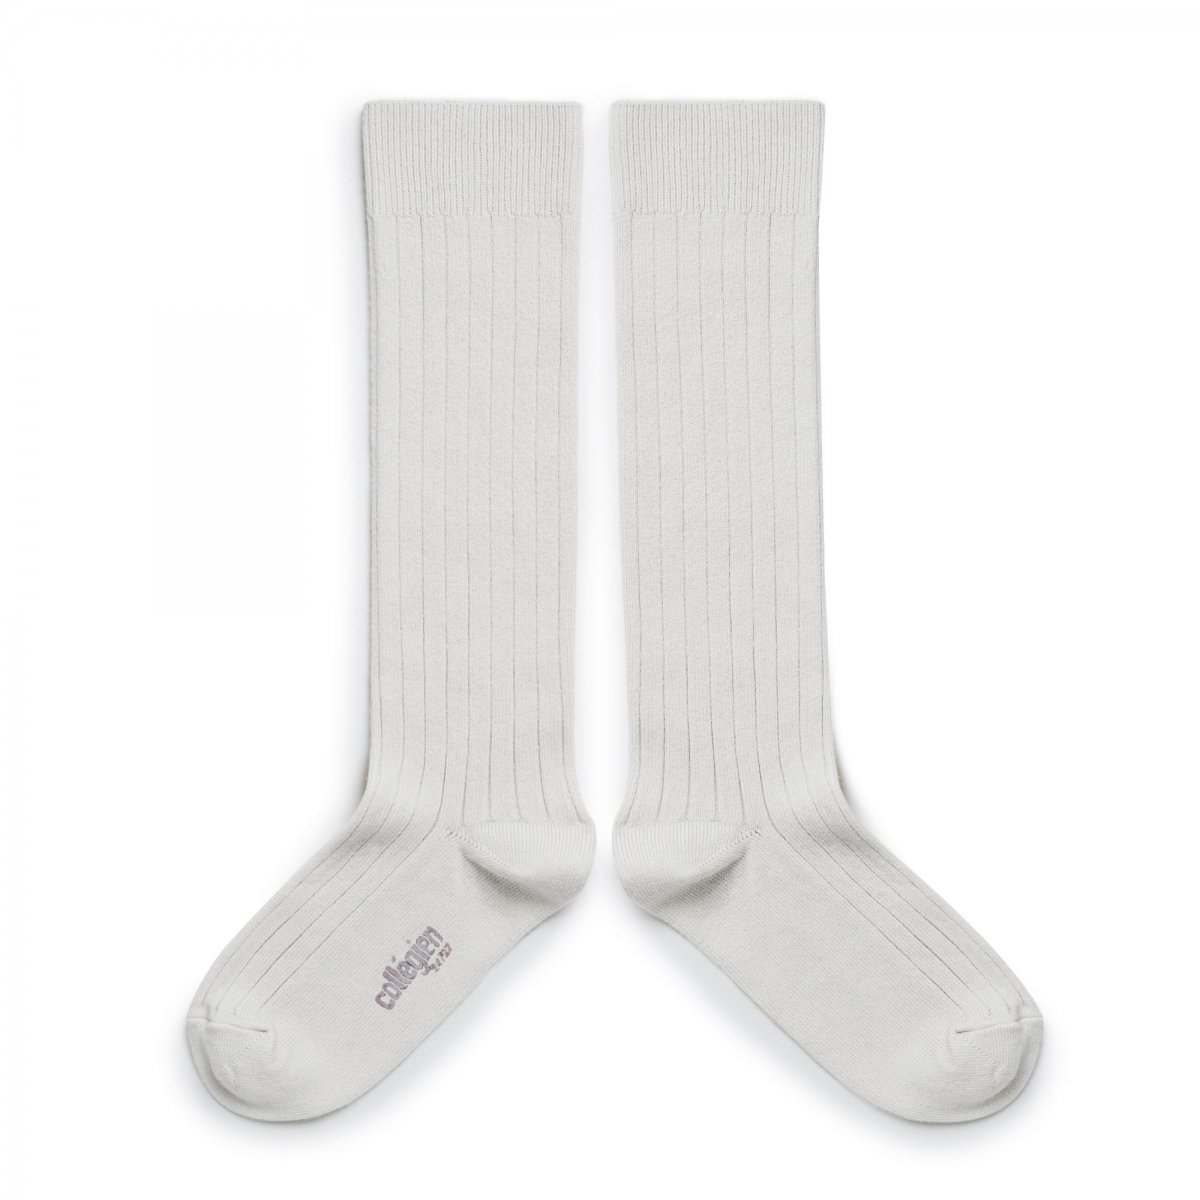 Collégien - Knee high socks La Haute blanc neige - タイツと靴下 - 2950 908 La Haute 